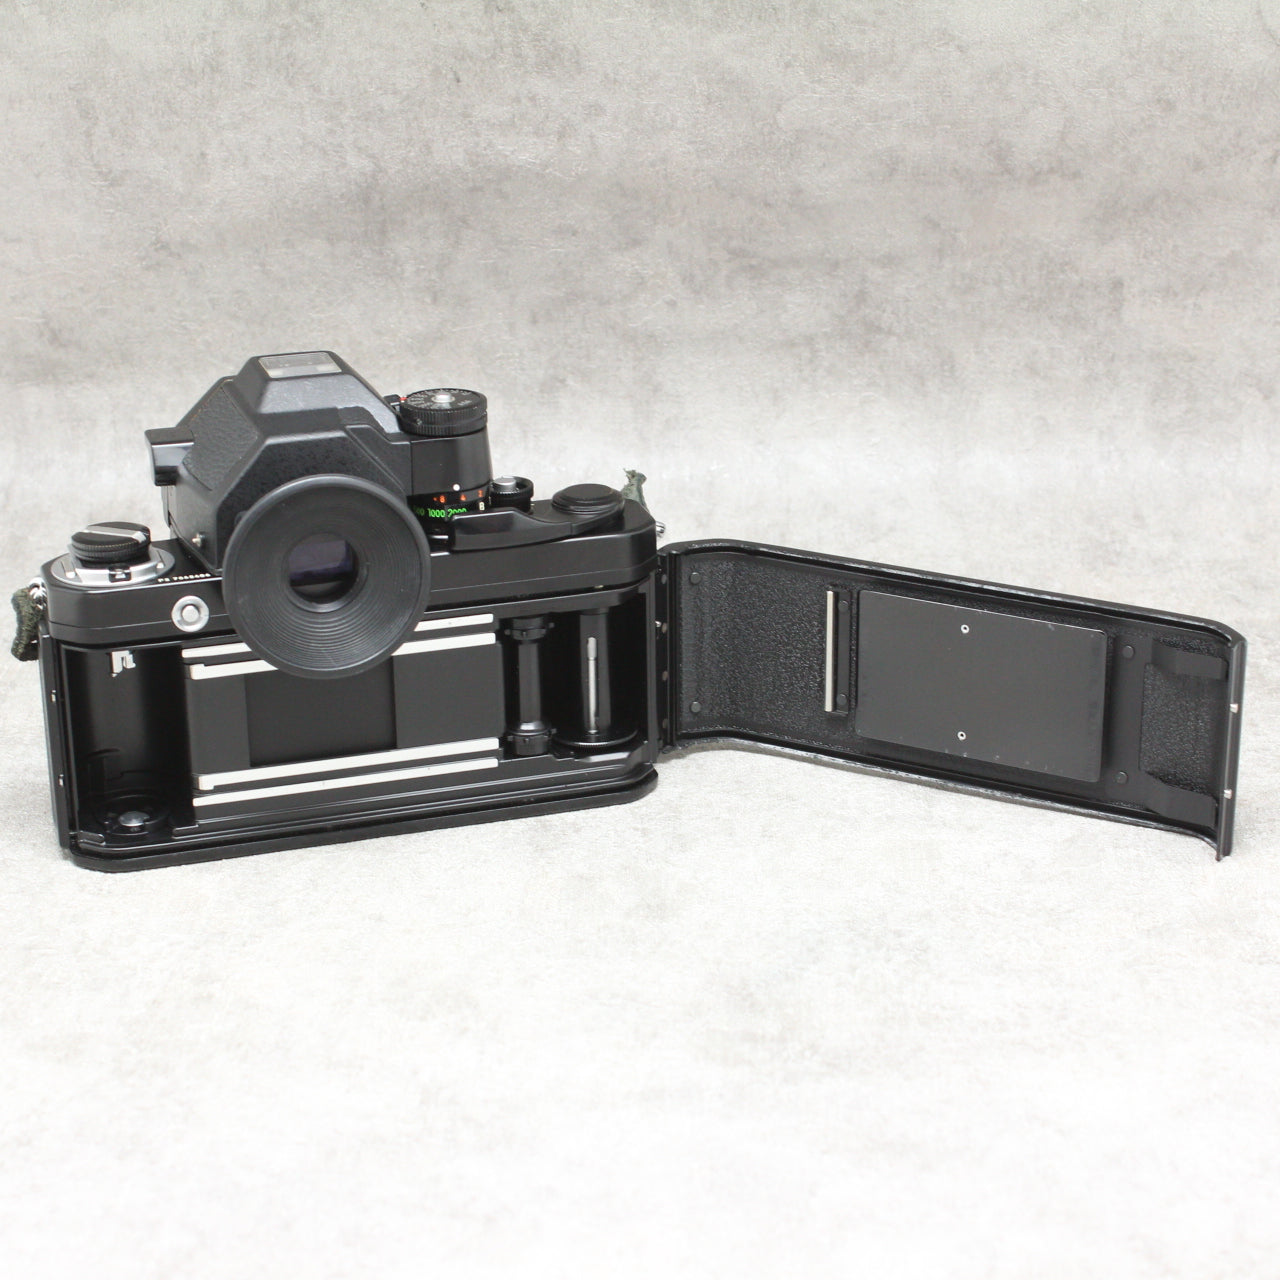 Nikon F2 フォトミック S ブラック シリアルナンバー751万番台